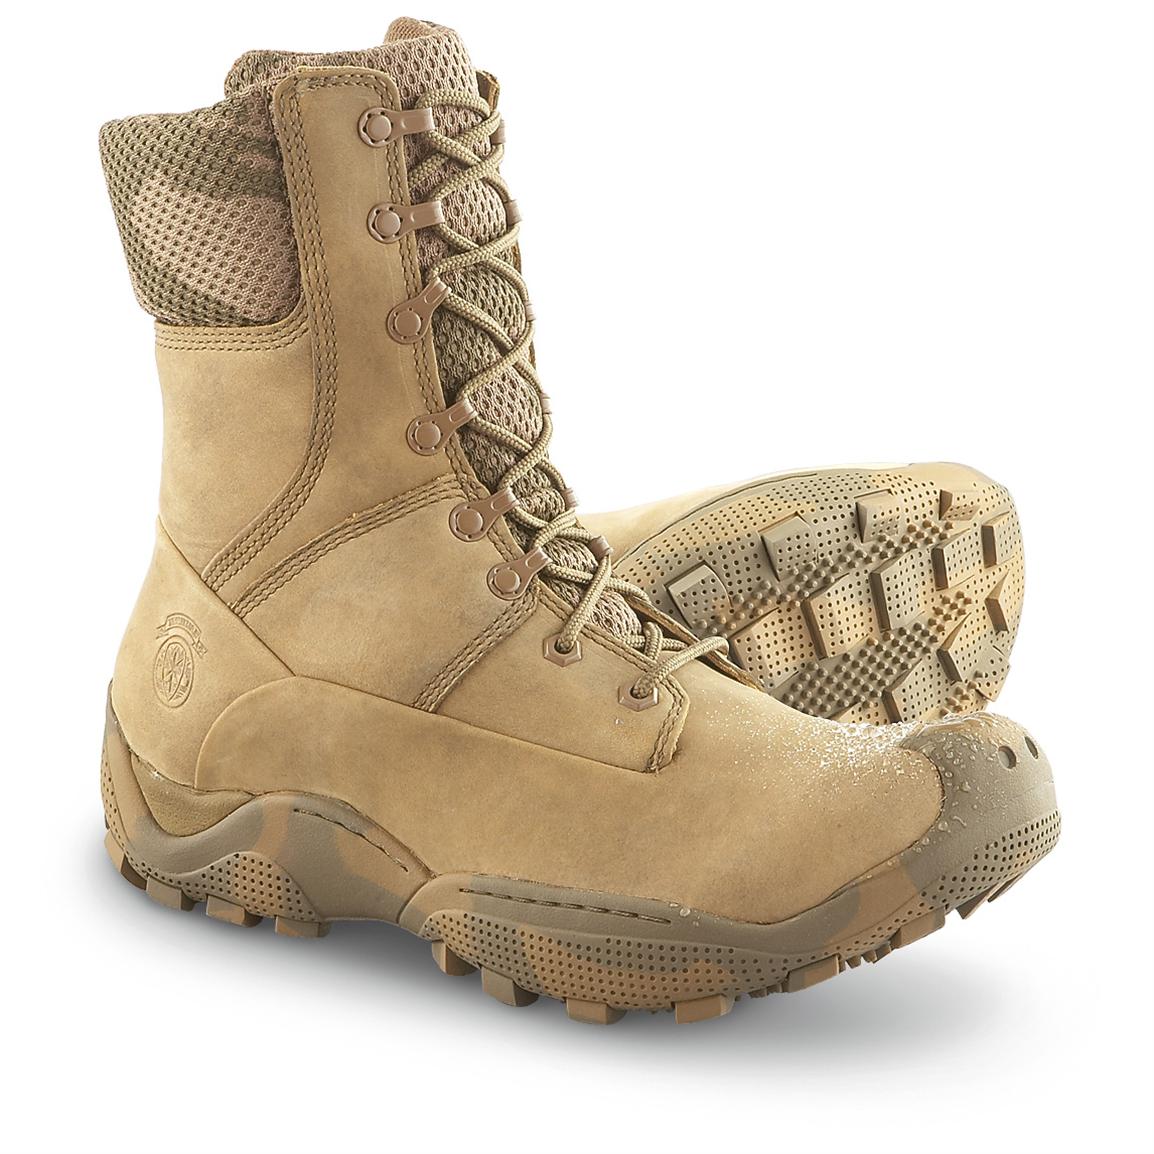 Desert Force Hi Boots, Coyote Brown 